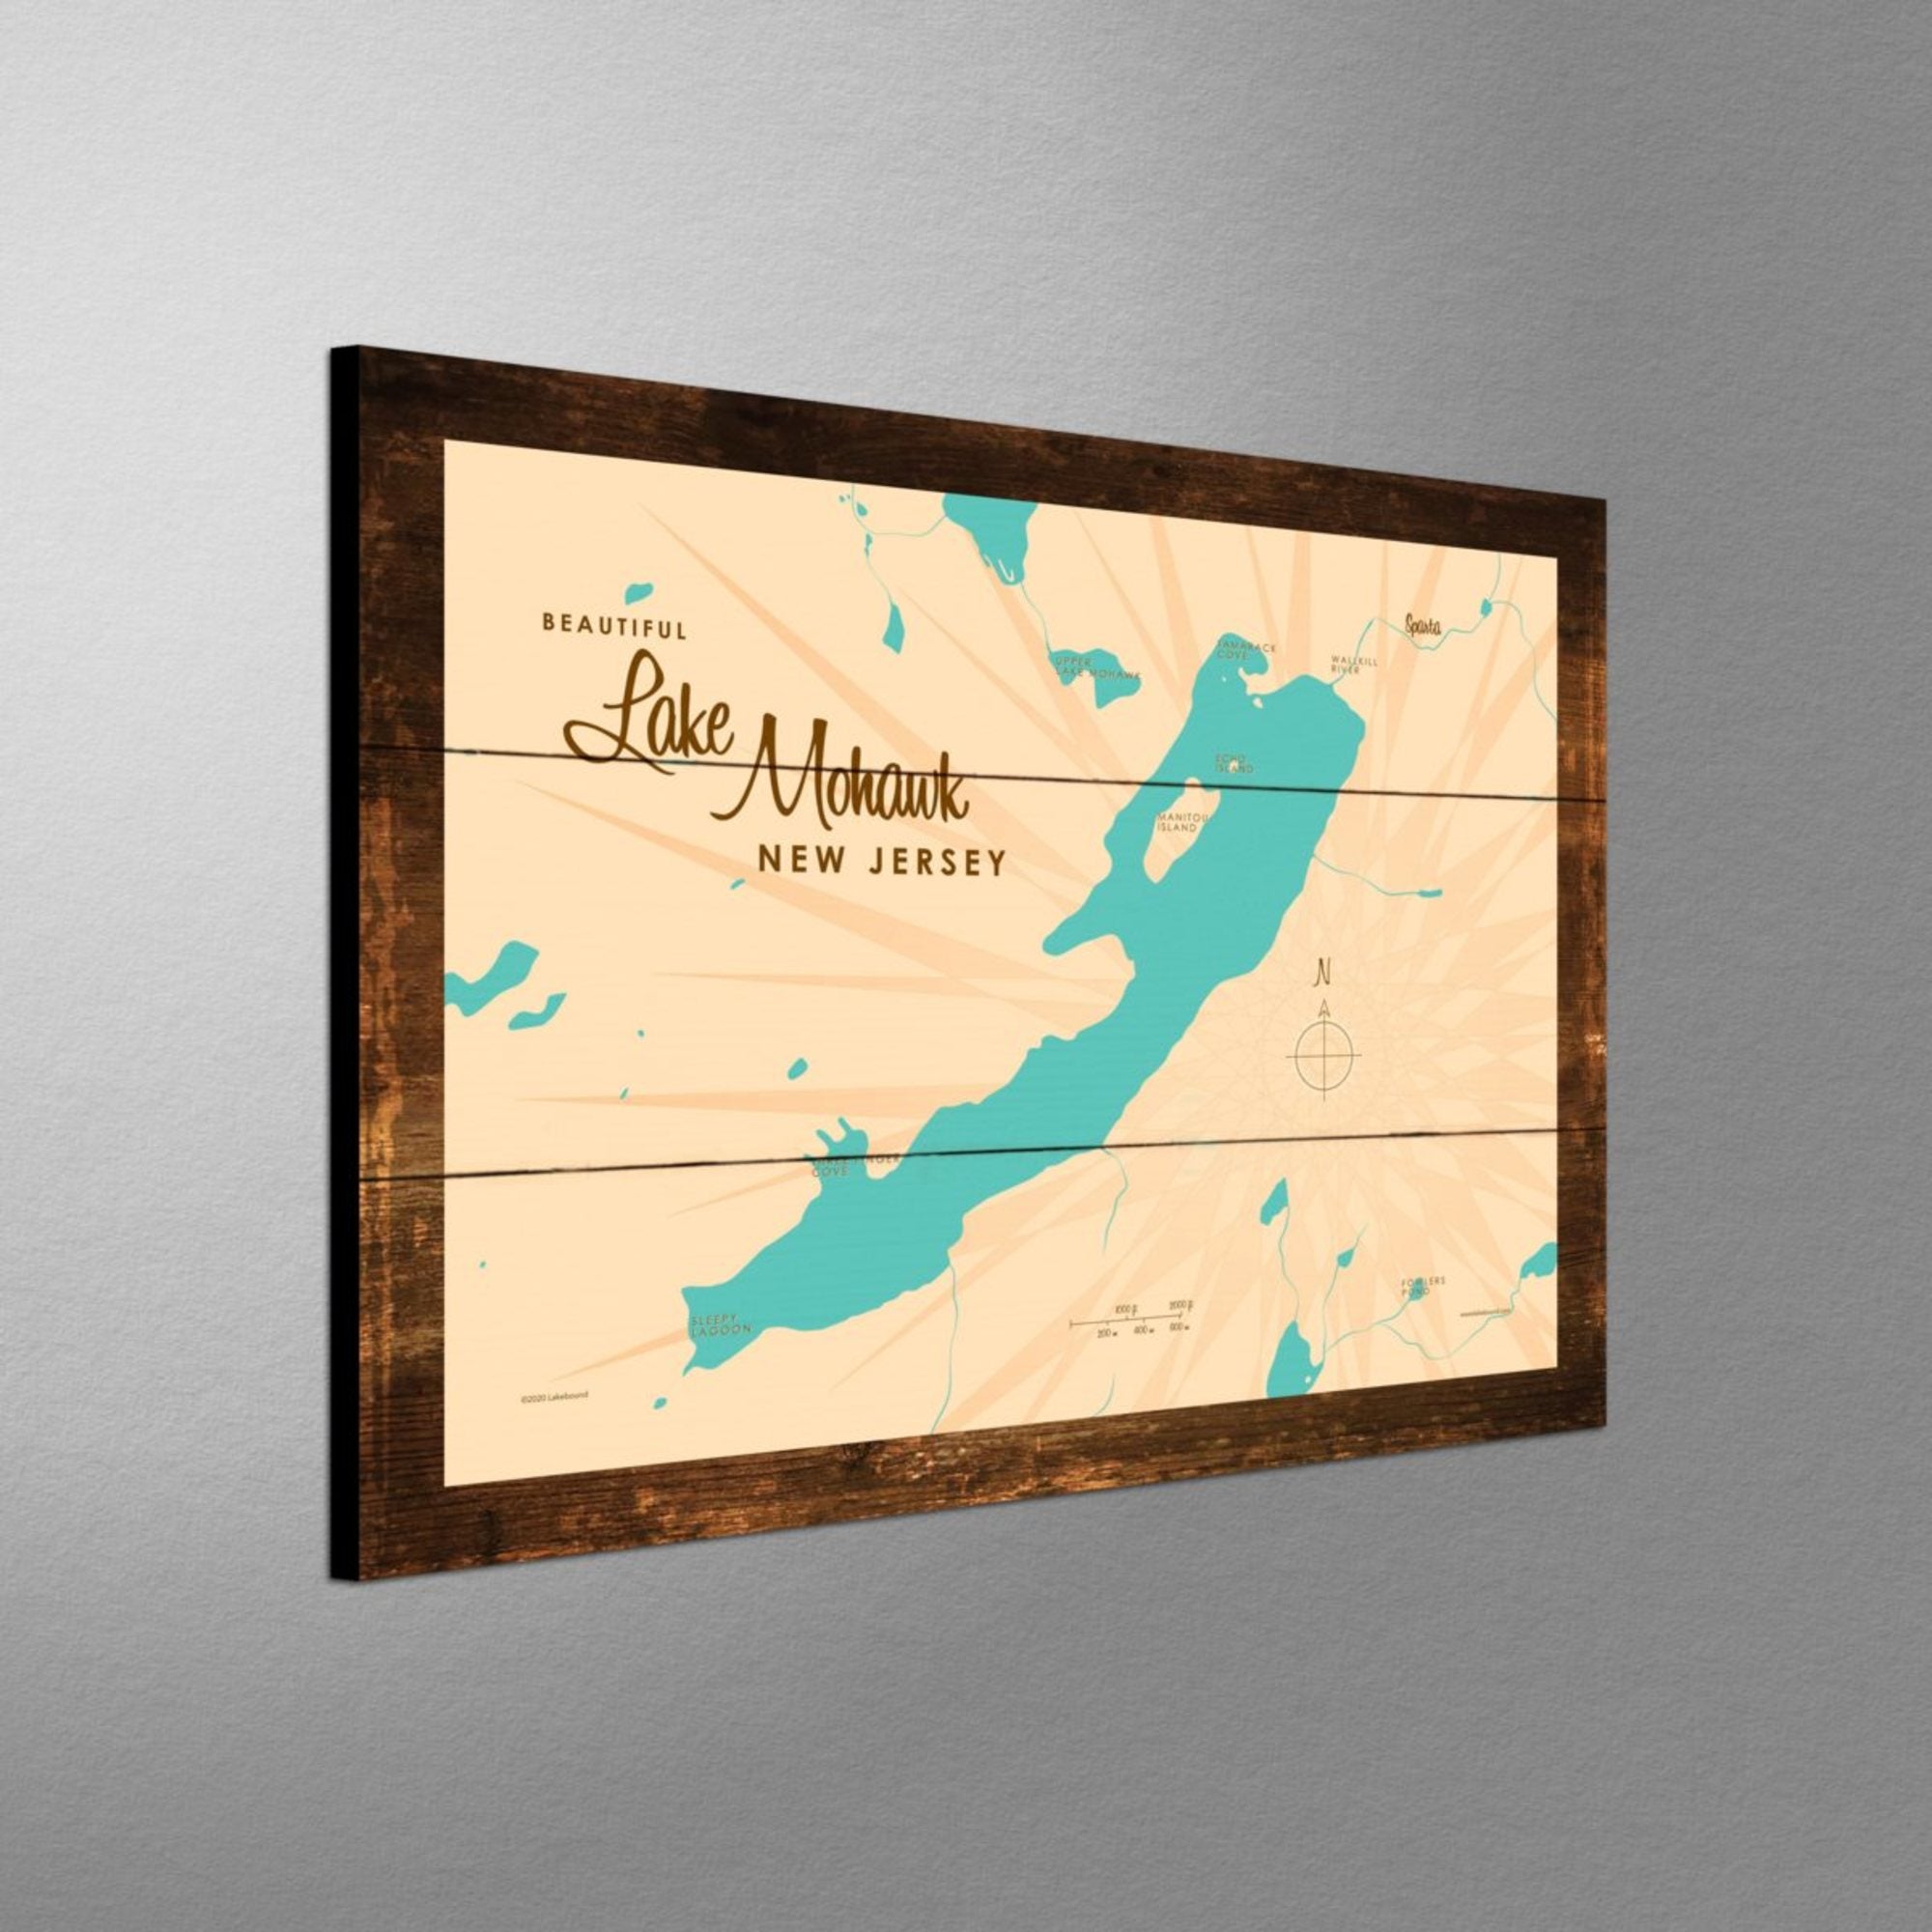 Lake Mohawk New Jersey, Rustic Wood Sign Map Art